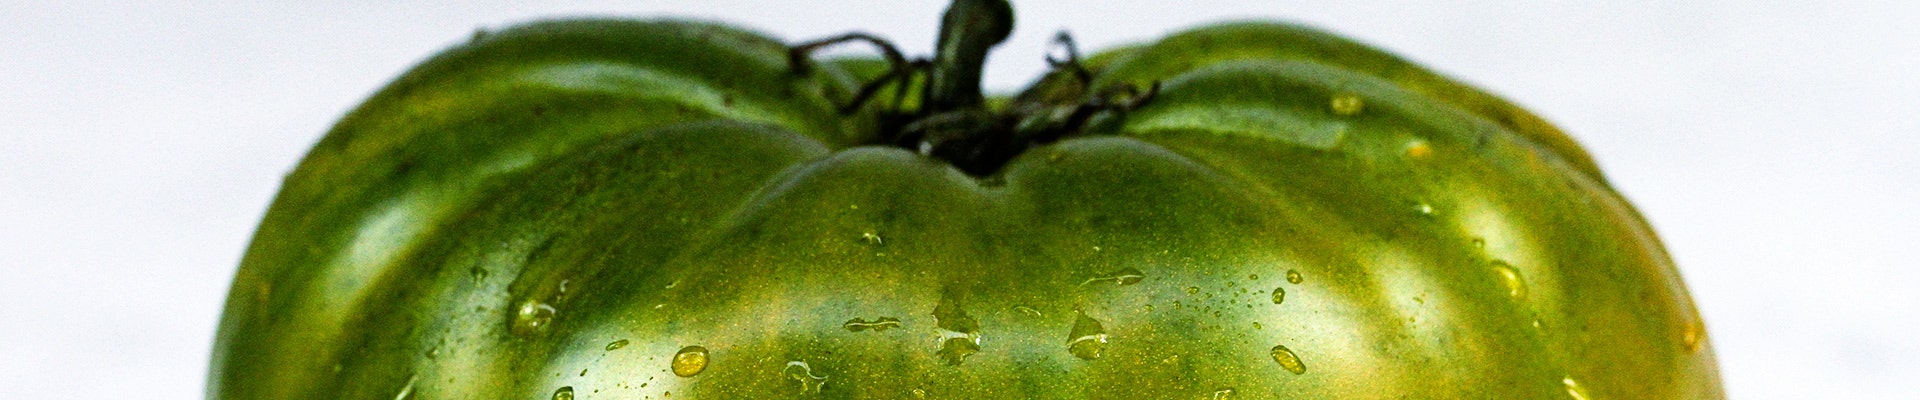 Tomatoes, Green